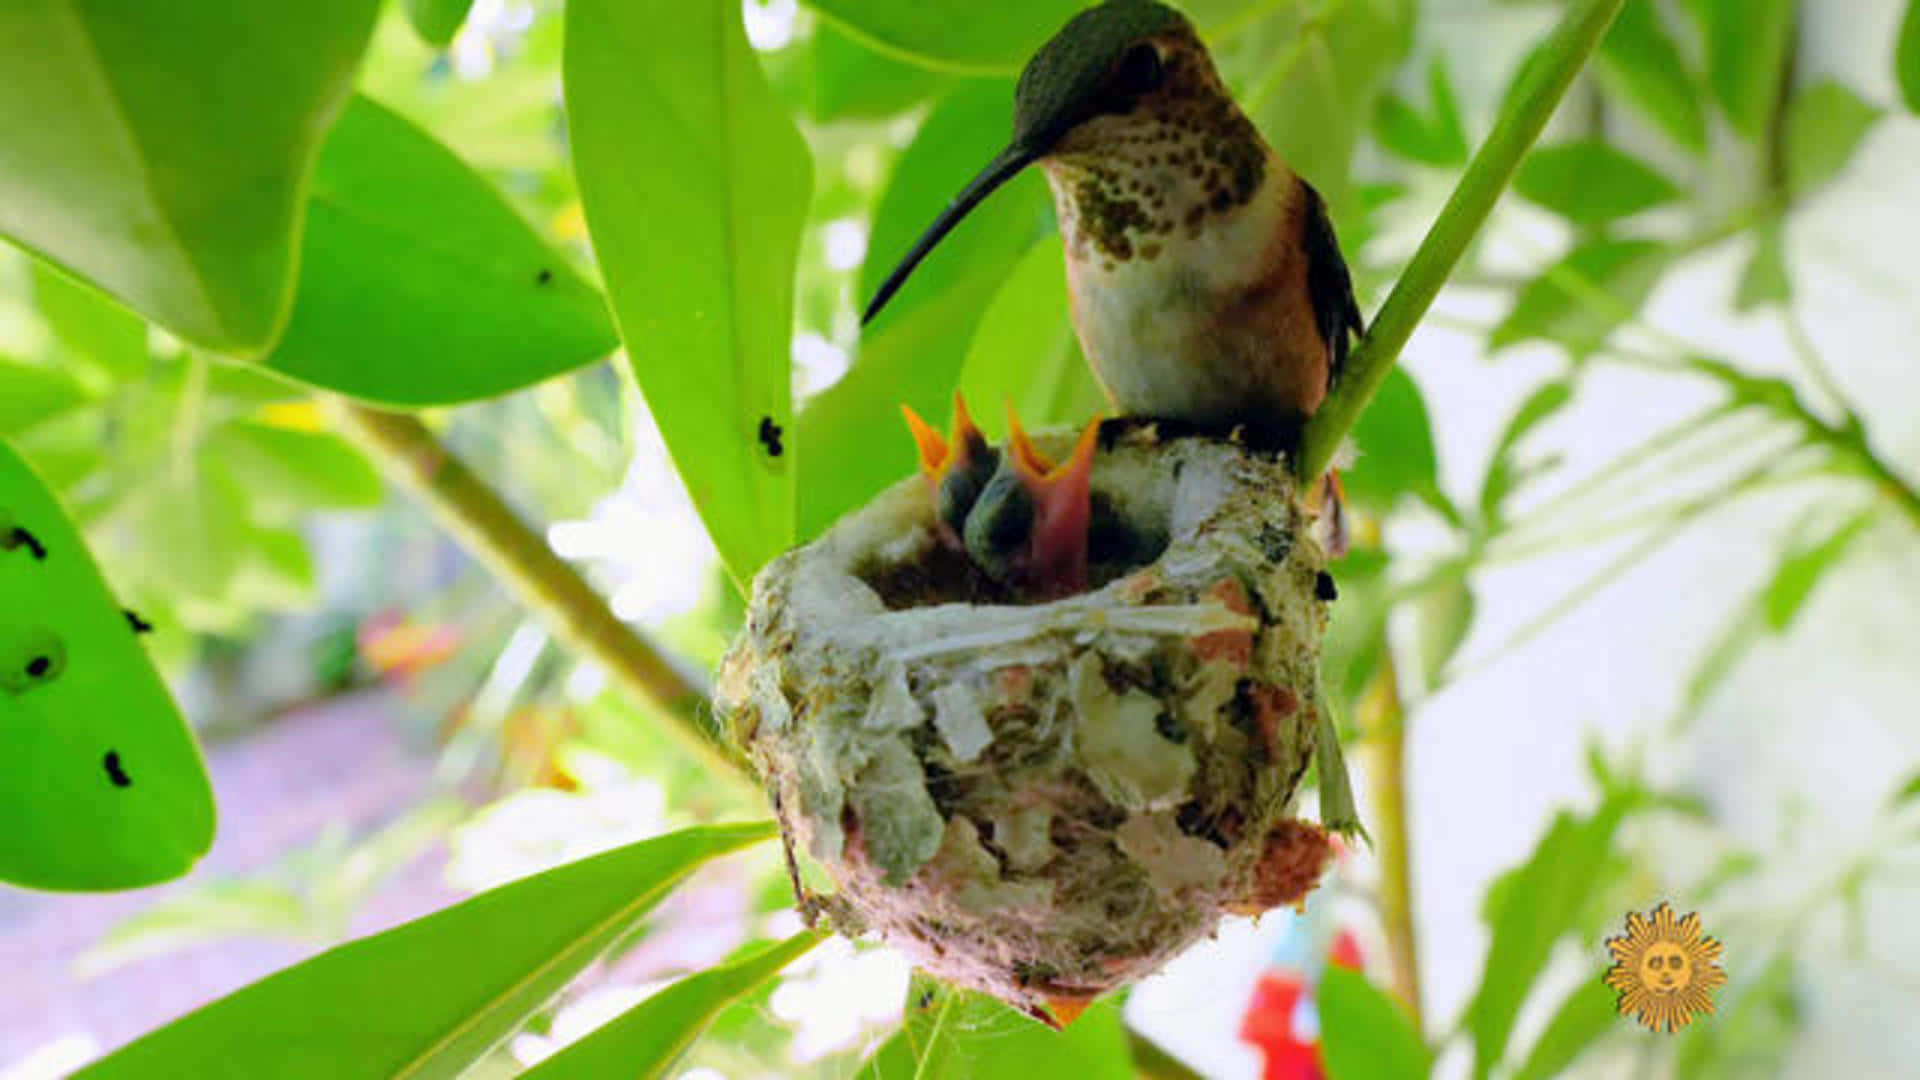 “Nature's Splendor: Hummingbird Nest”